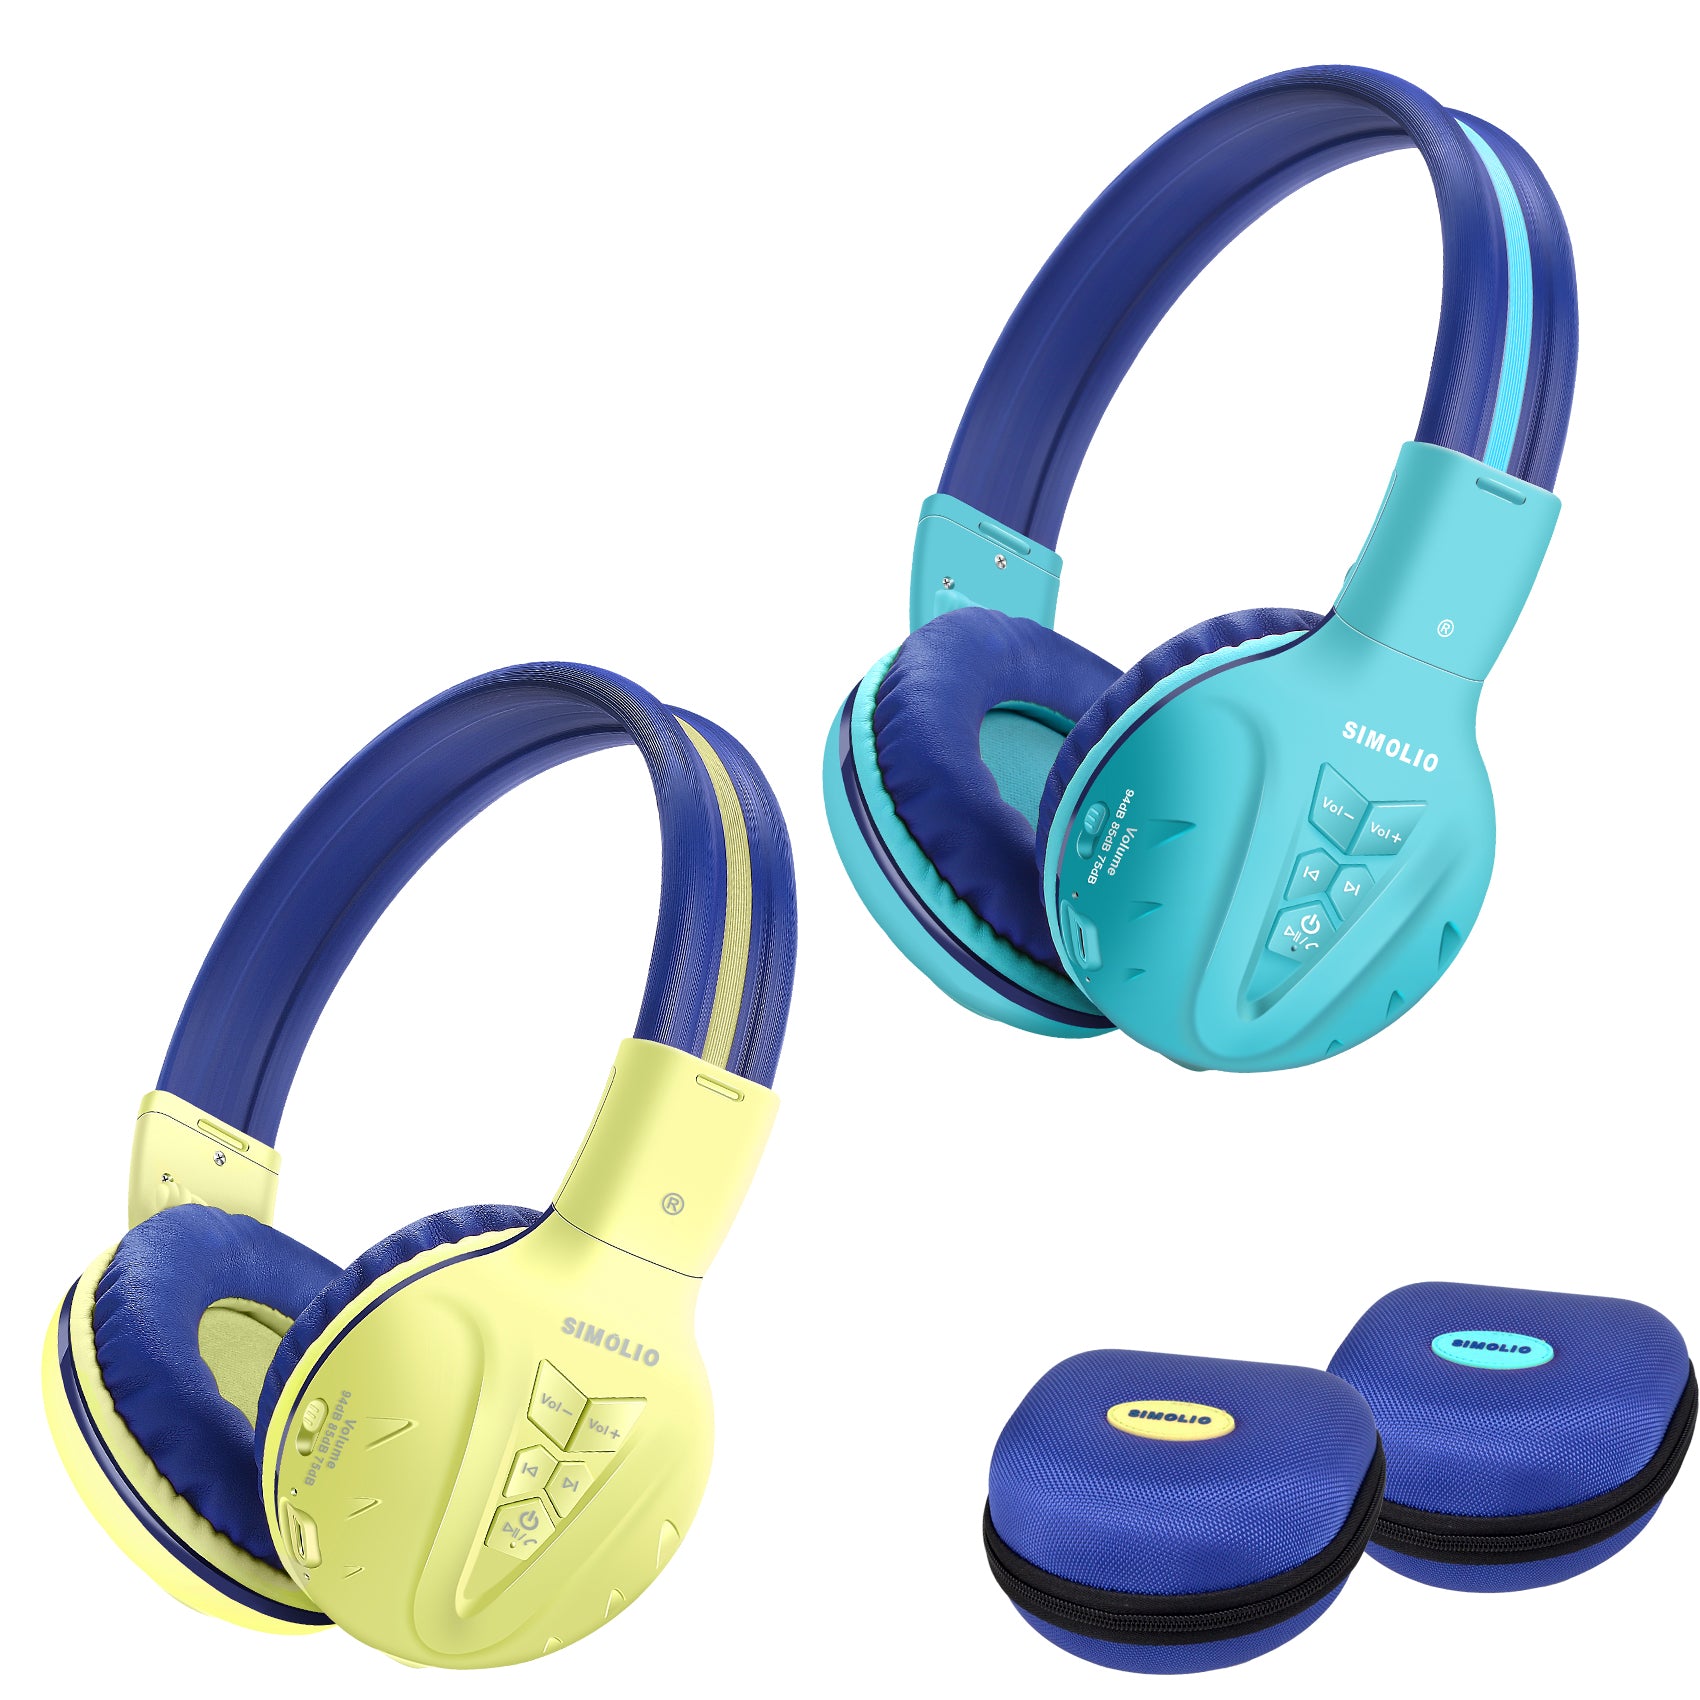 SIMOLIO Bluetooth Kids Headphones Volume Limited with Share Jack and EVA Hard Case, 2 Packs (JH-711 Series 2 Packs)